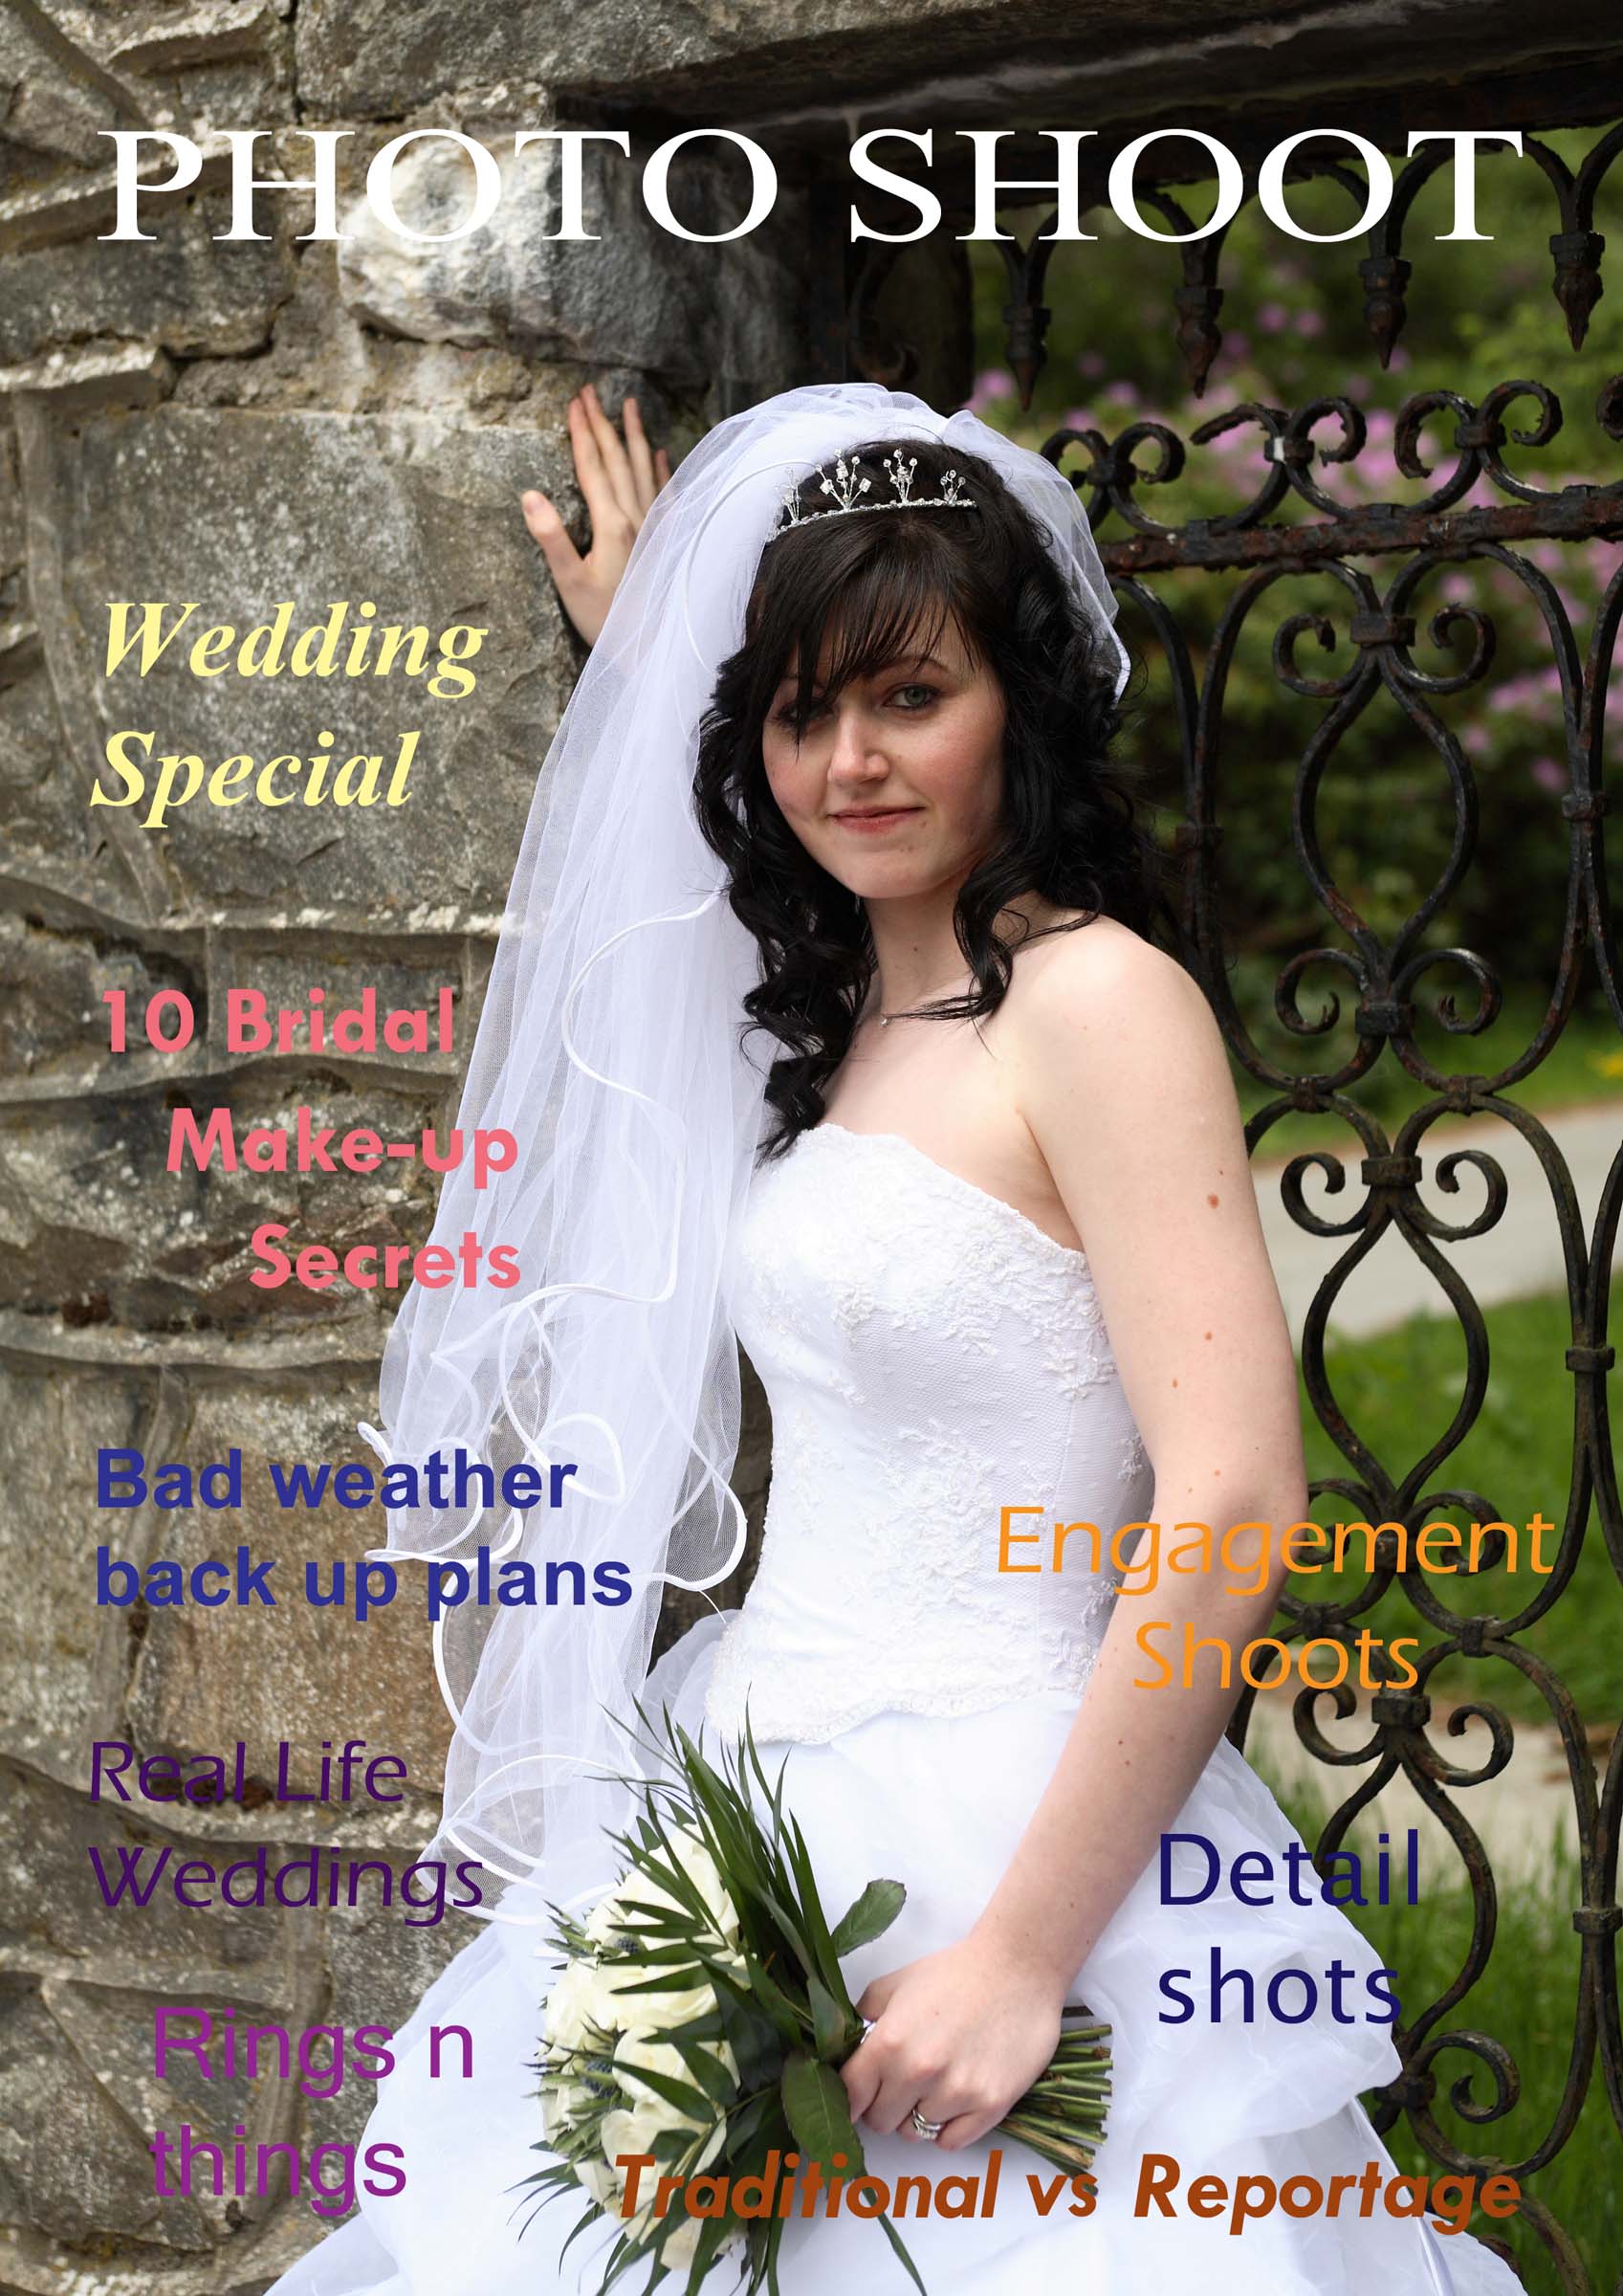 Wedding Photography magazine cover